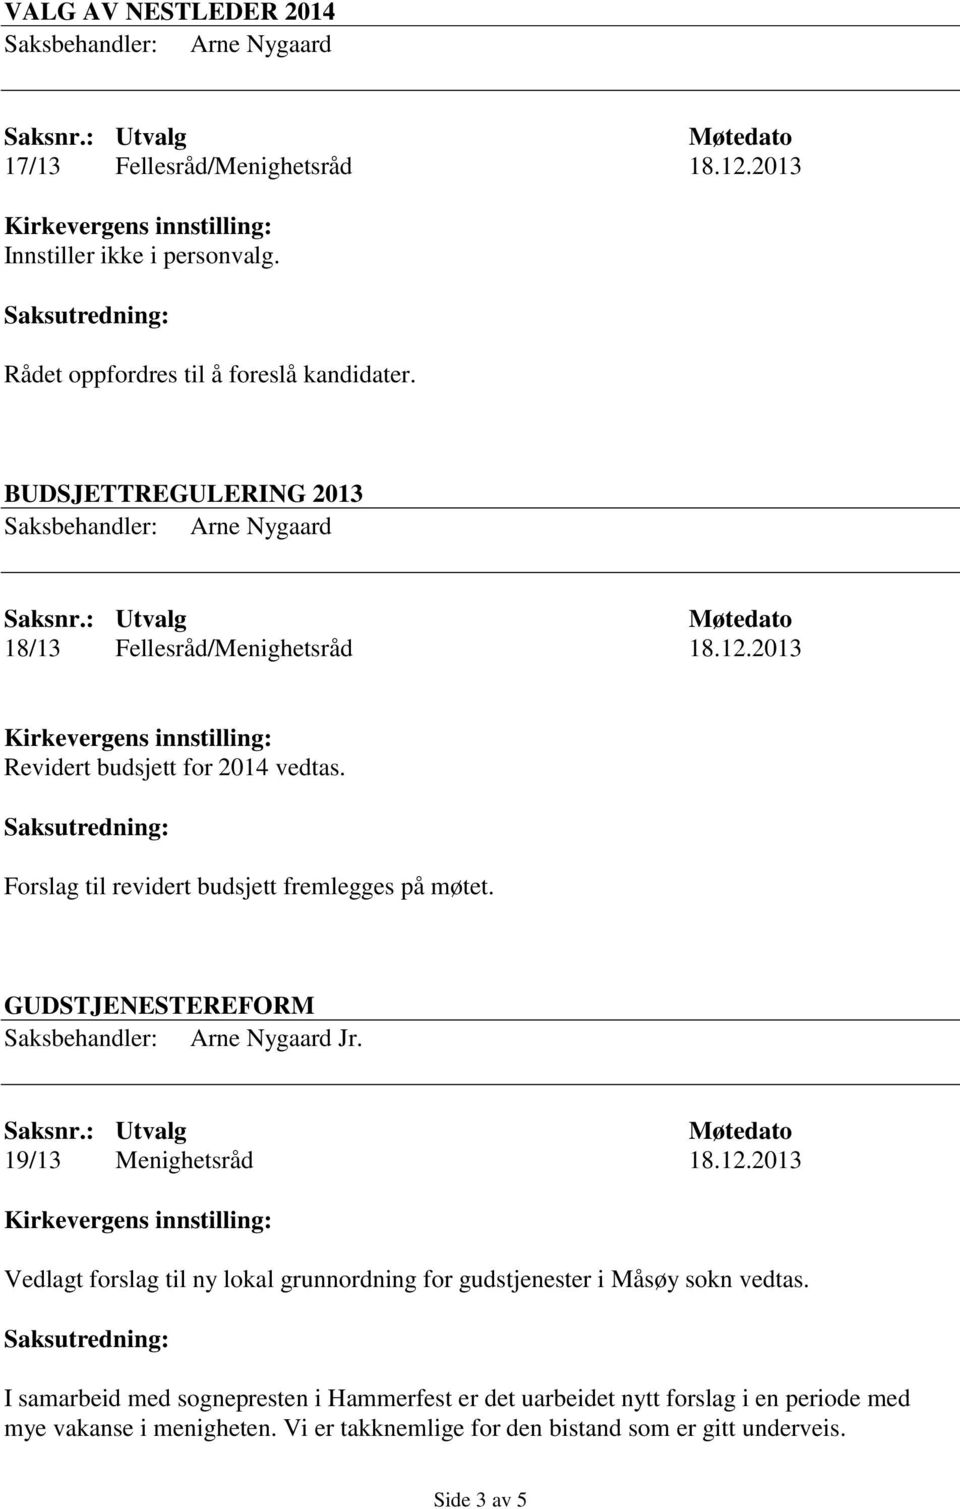 GUDSTJENESTEREFORM 19/13 Menighetsråd 18.12.2013 Vedlagt forslag til ny lokal grunnordning for gudstjenester i Måsøy sokn vedtas.